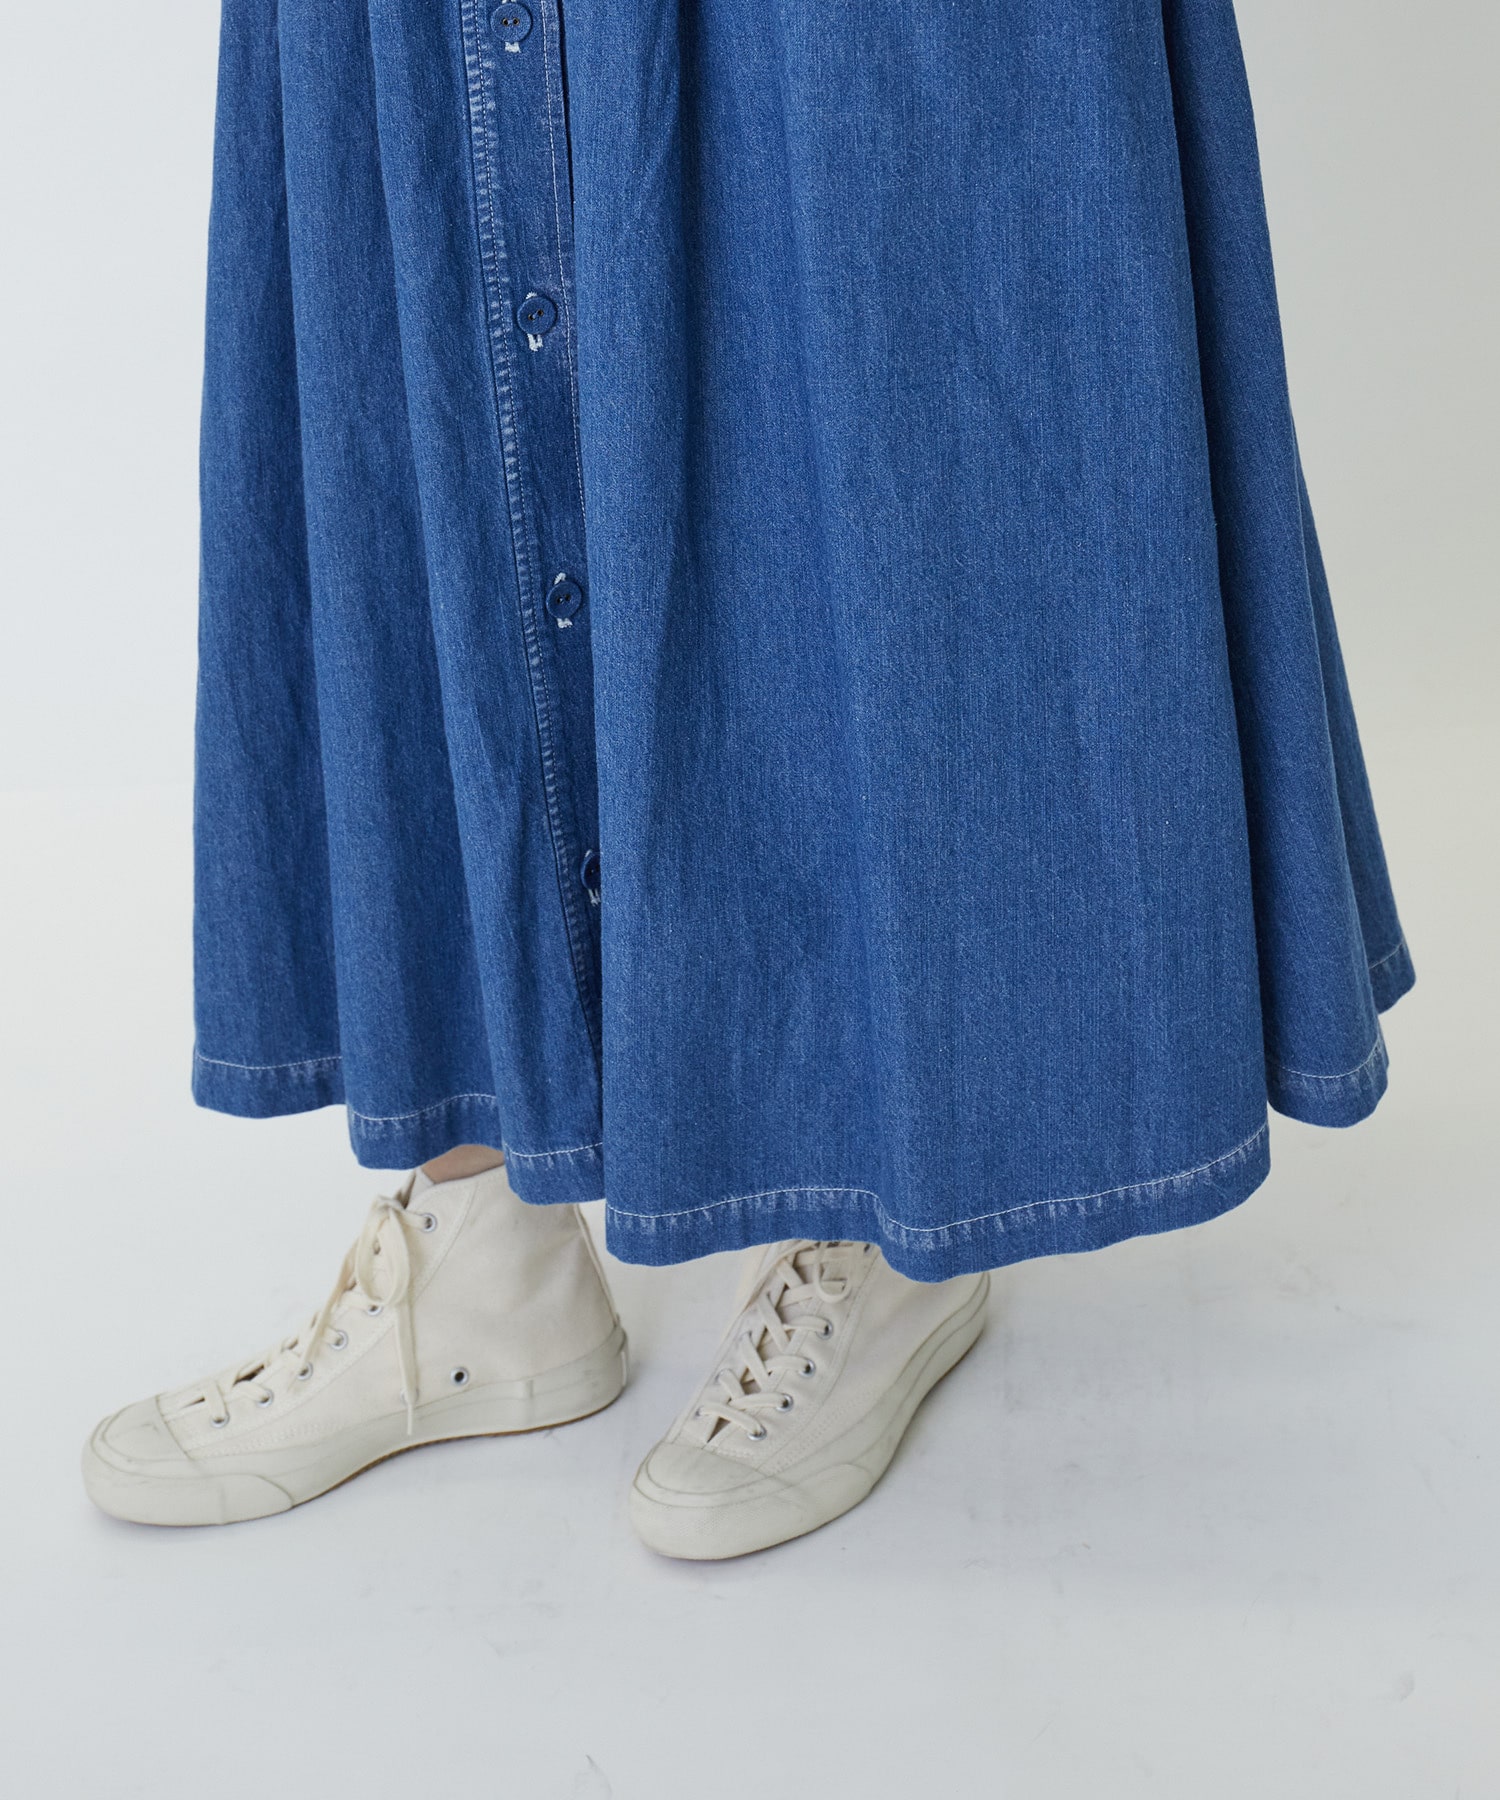 【LOISIR】綿麻ライトオンスデニムギャザーフレアーデザインスカート 詳細画像 インディゴブルー 11